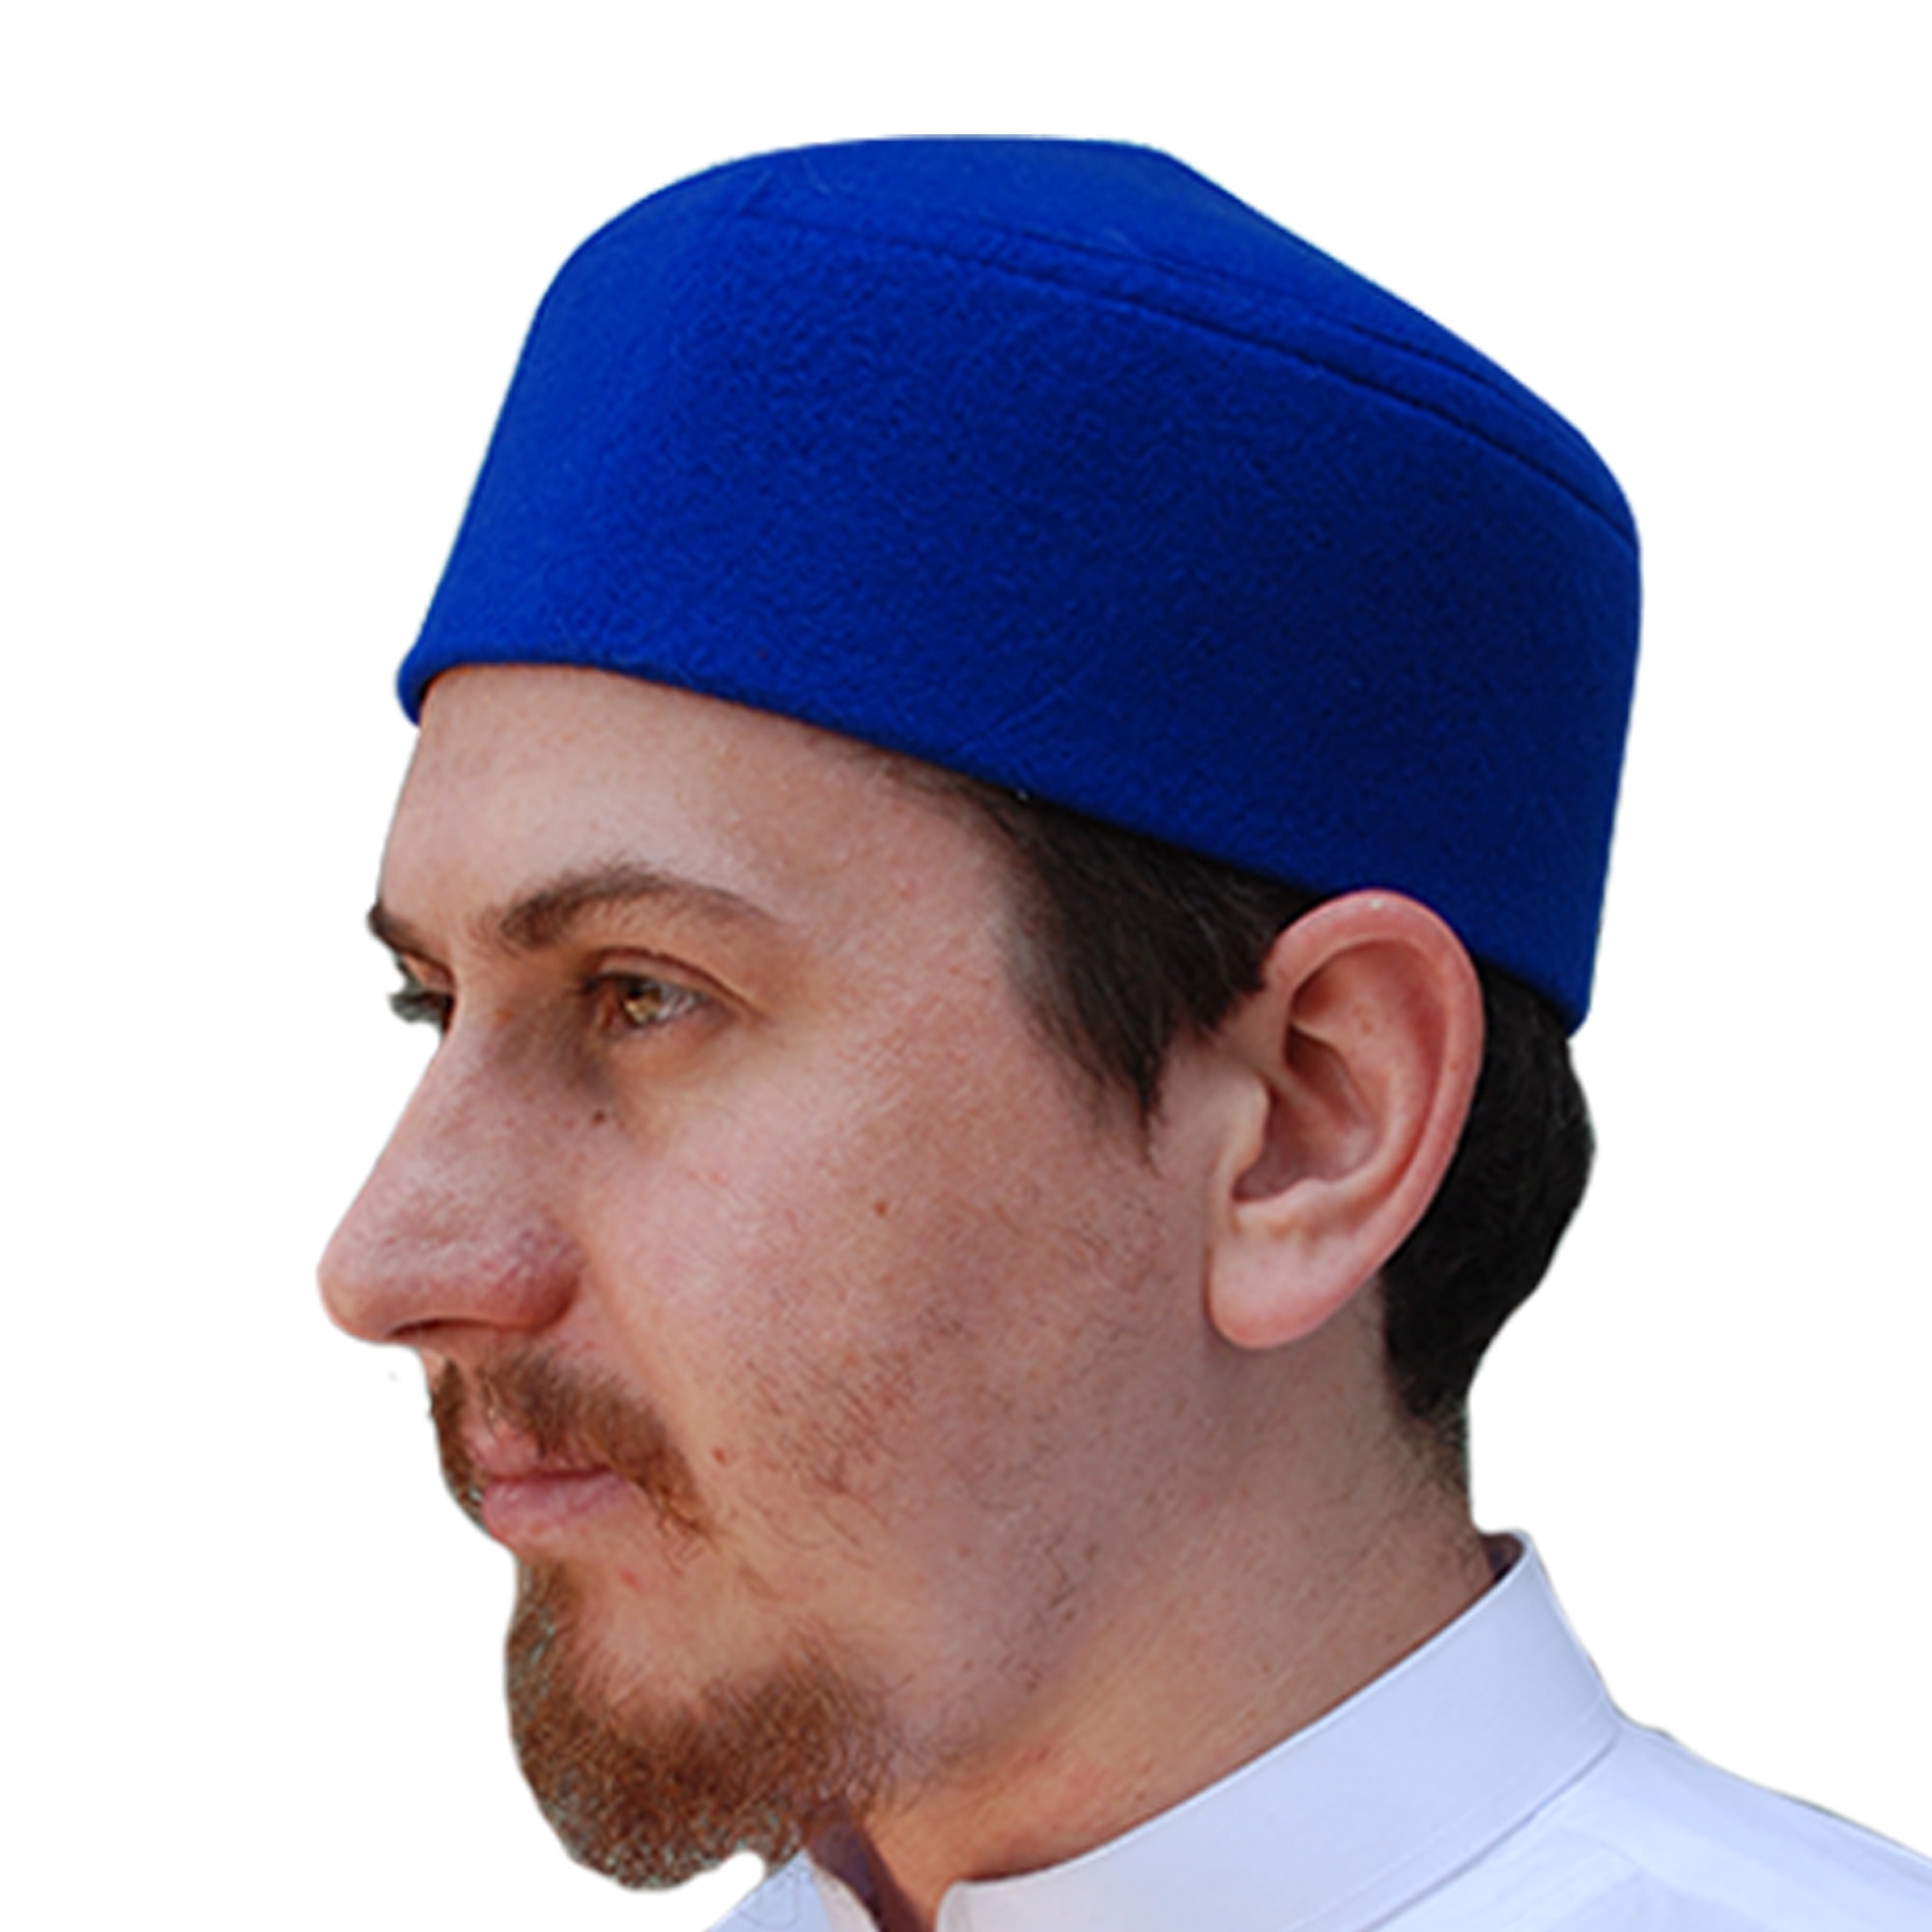 Tan Felt Wool Fez Hat with Tip Kufi Prayer Cap